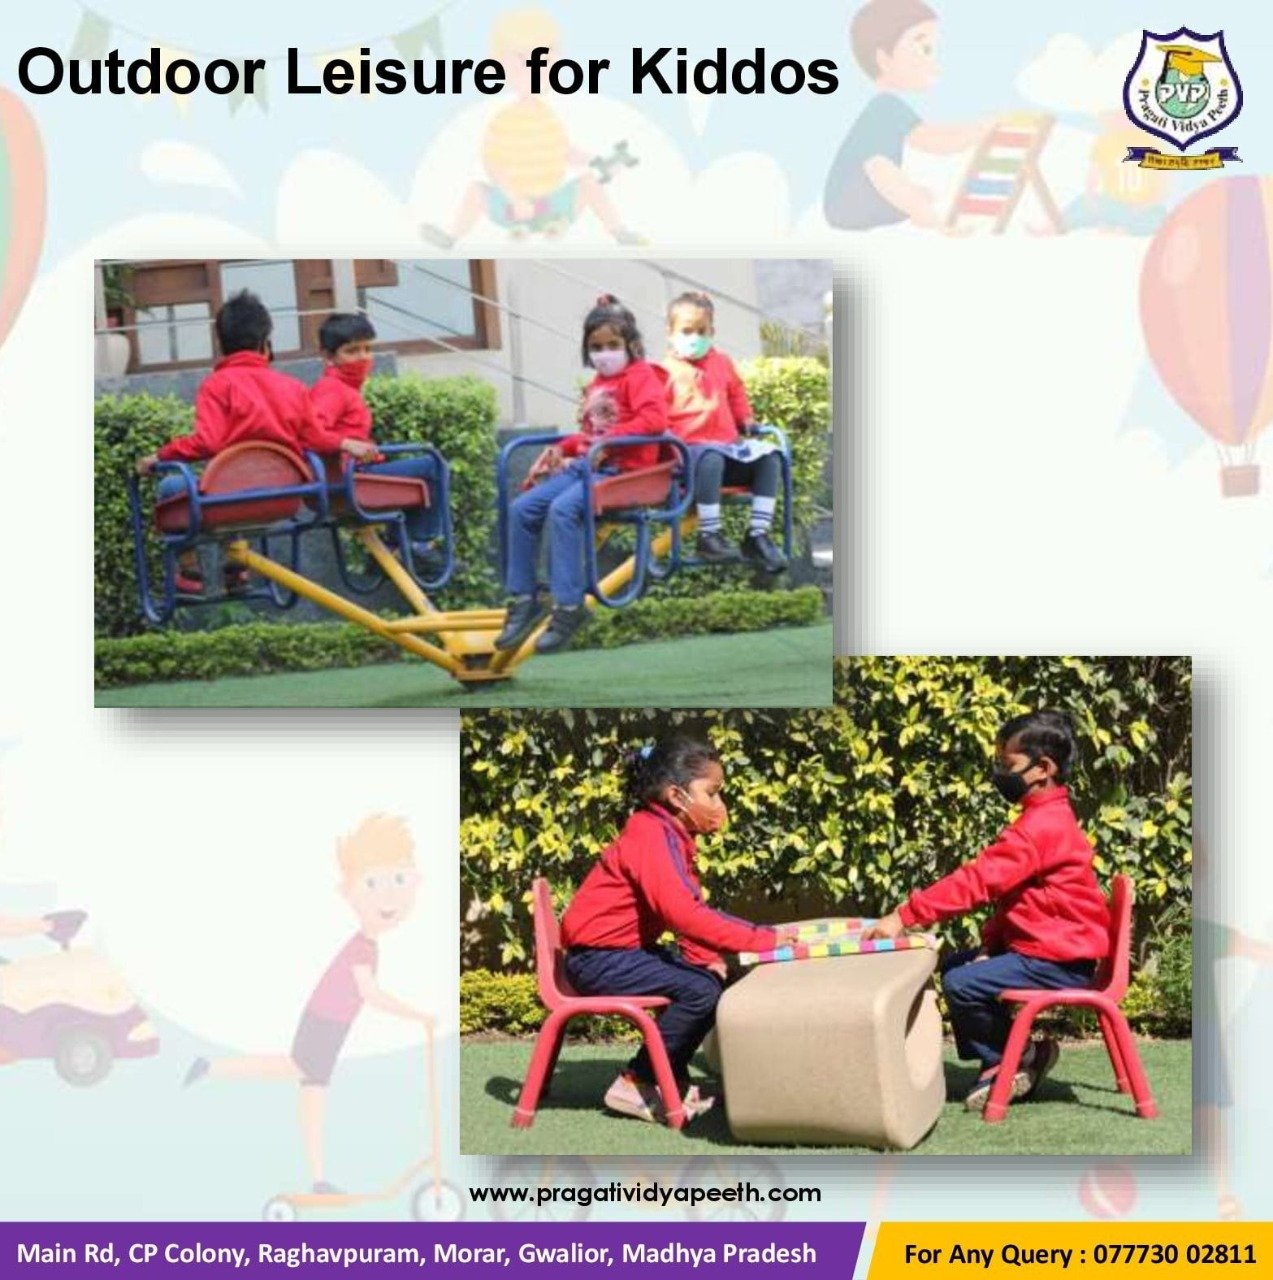 Outdoor Leisure for Kiddos